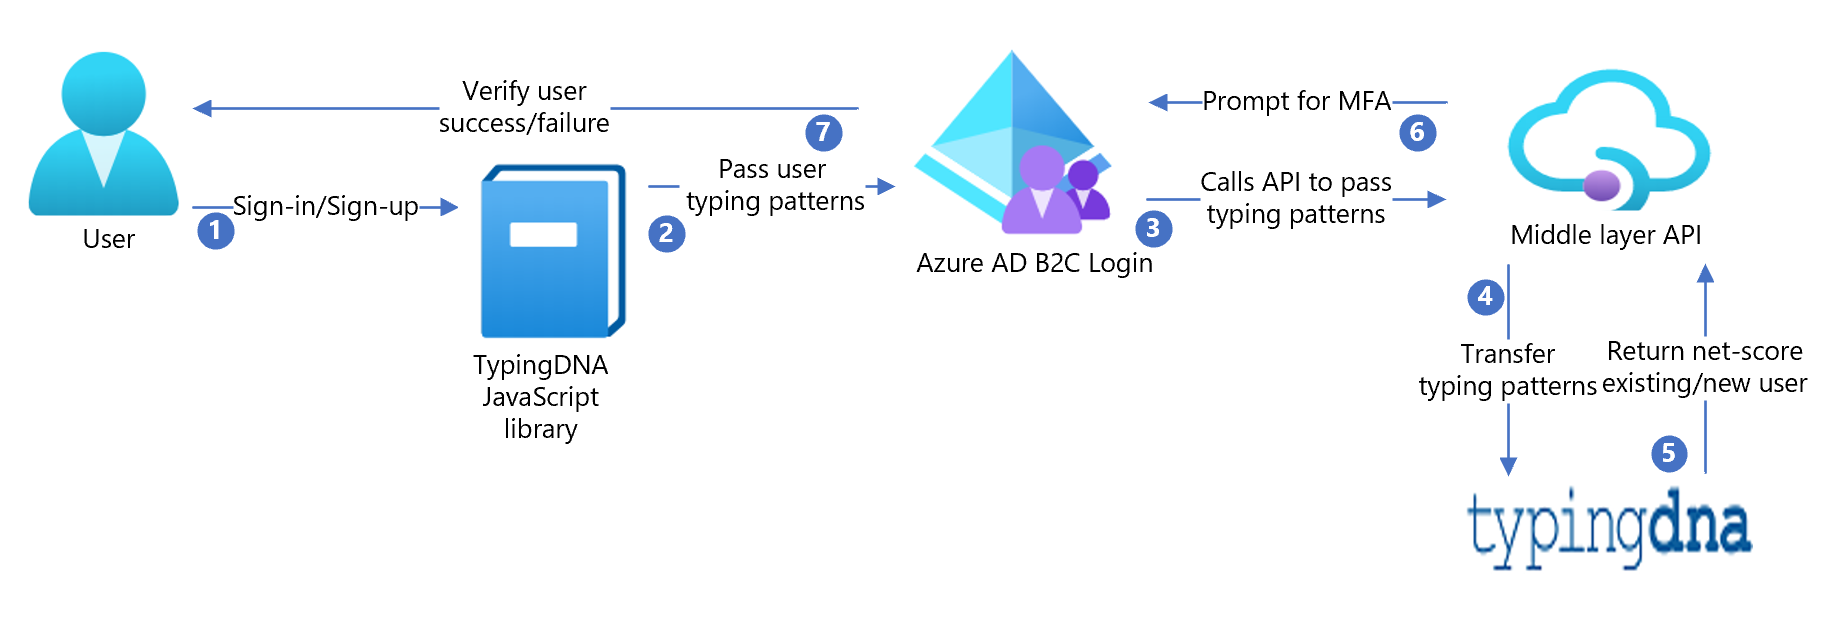 Screenshot of TypingDNA architecture diagram